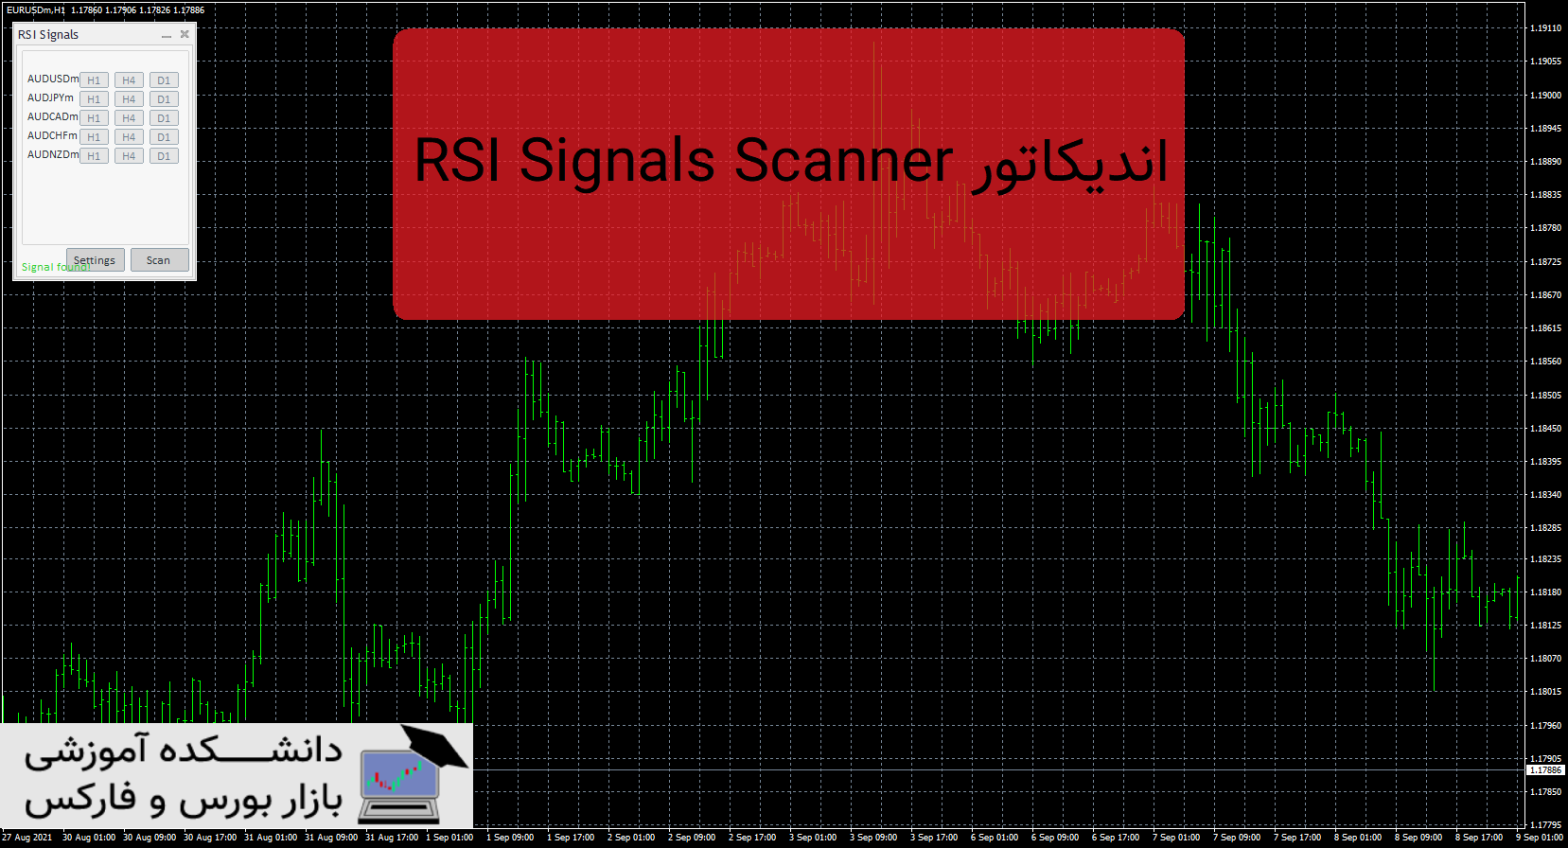 RSI Signals Scanner دانلود و معرفی اندیکاتور